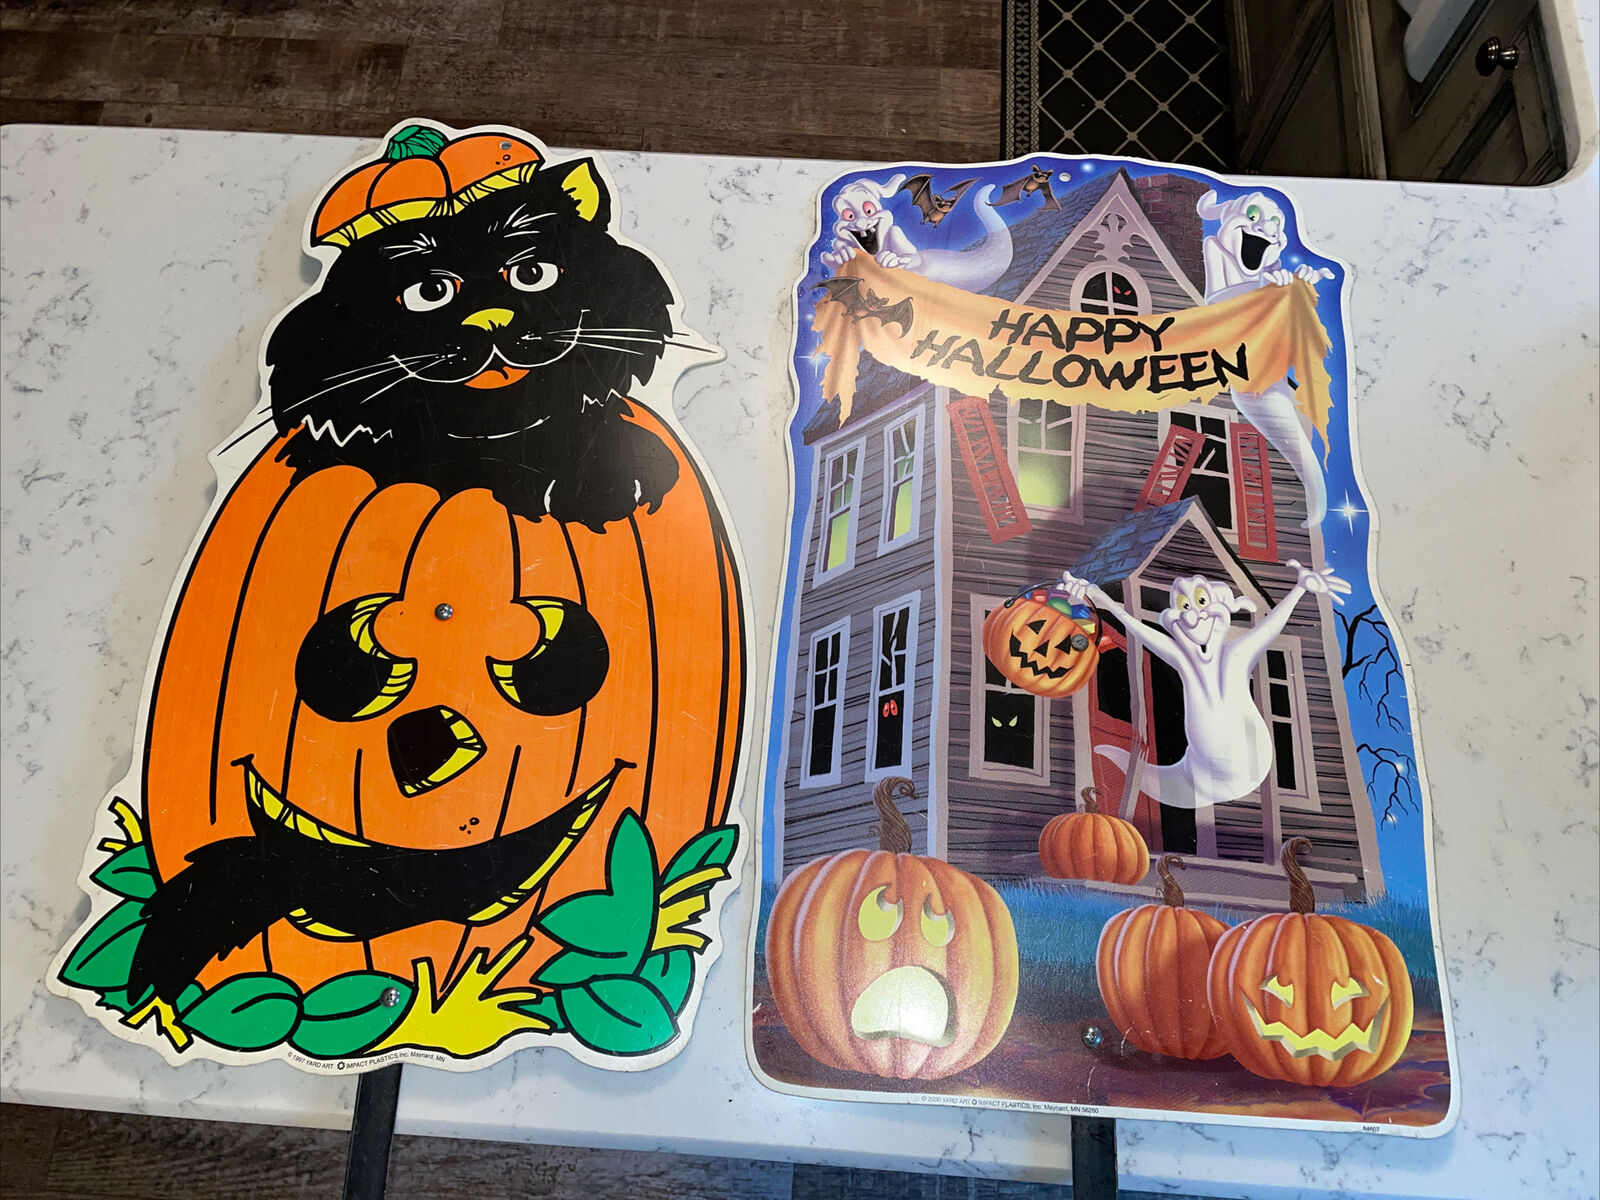 Two 1997 Black Cat Pumpkin & House Halloween Signs Yard Art Impact Plastics 26”